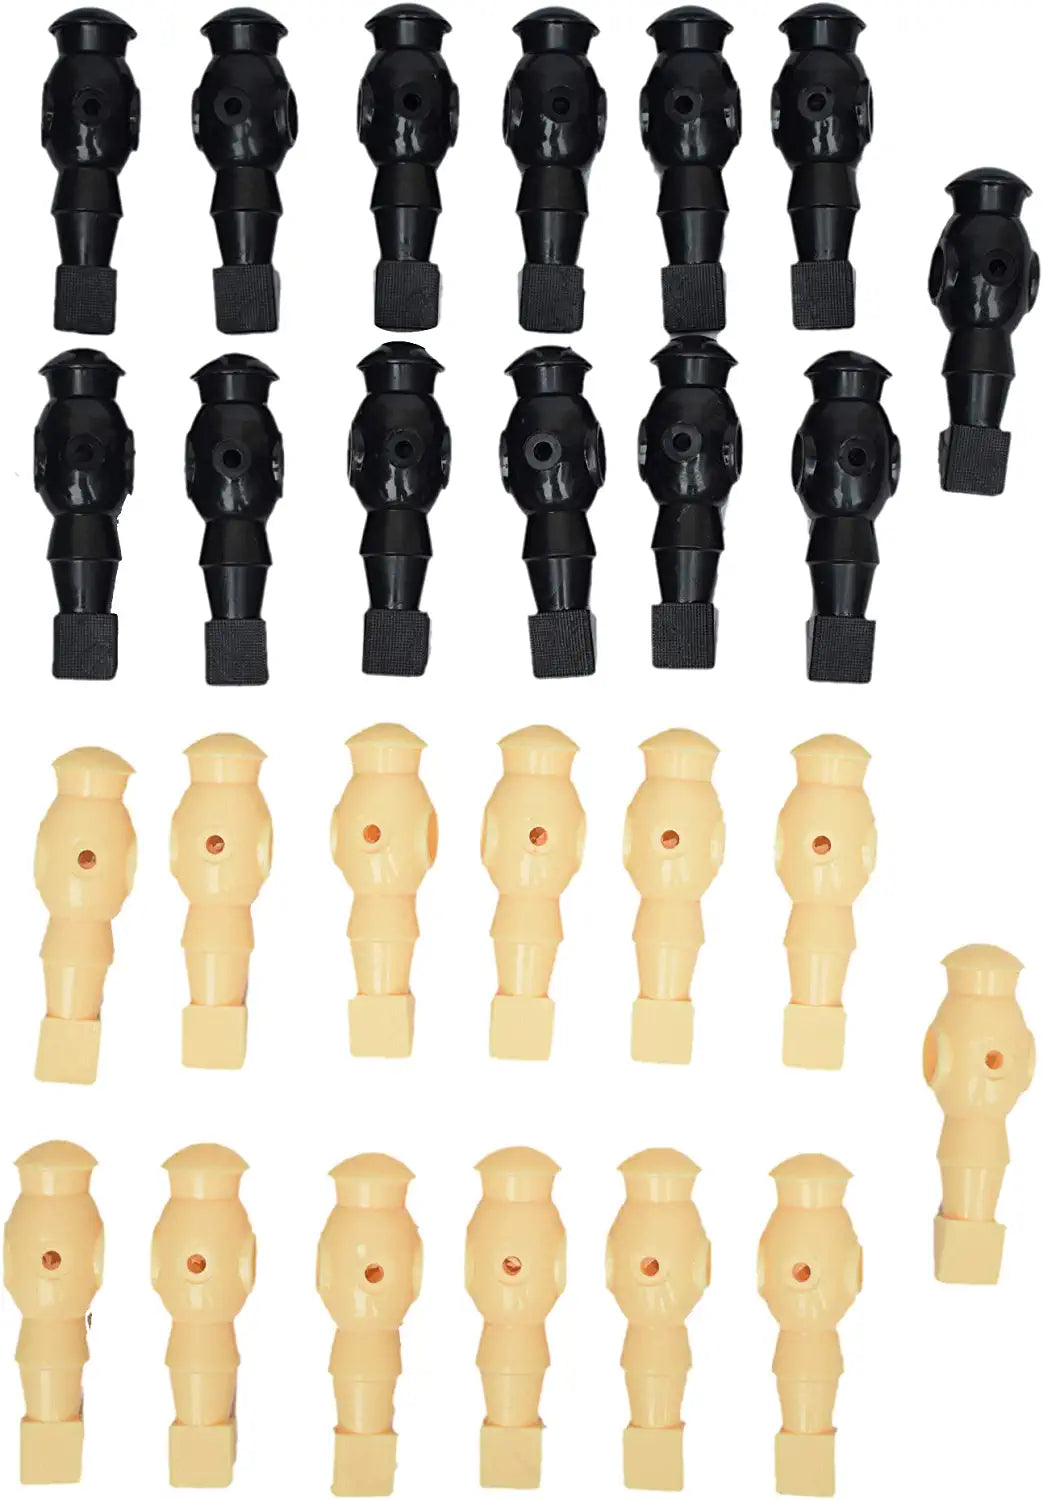 Hathaway Premium Replacement Foosball Men - Set of 26, Black/White